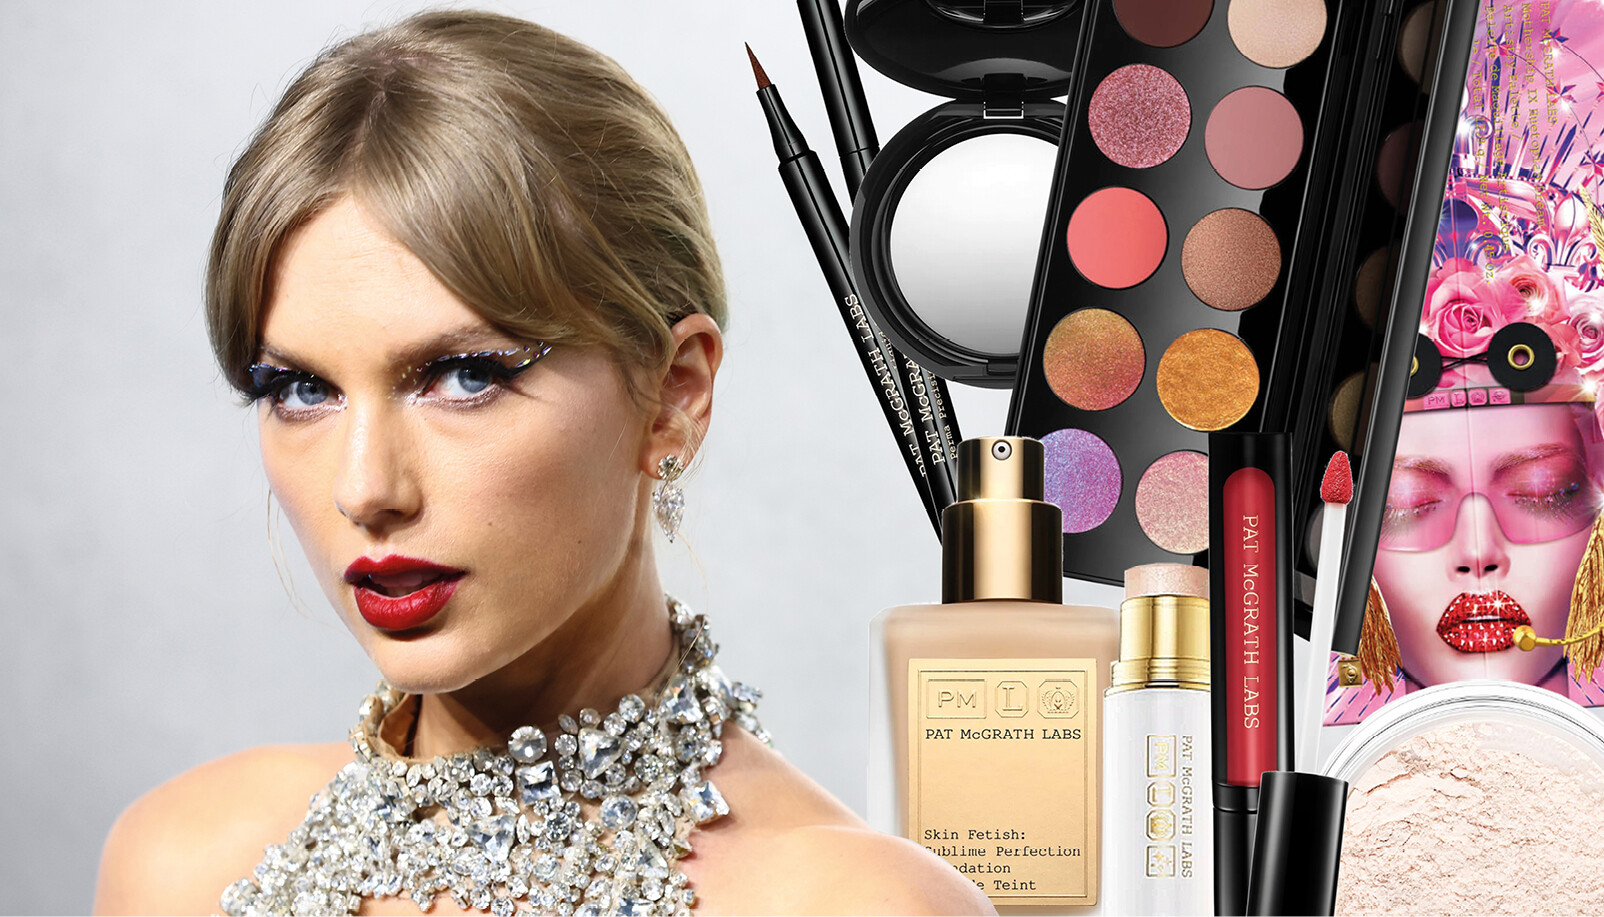 Taylor swift make-up